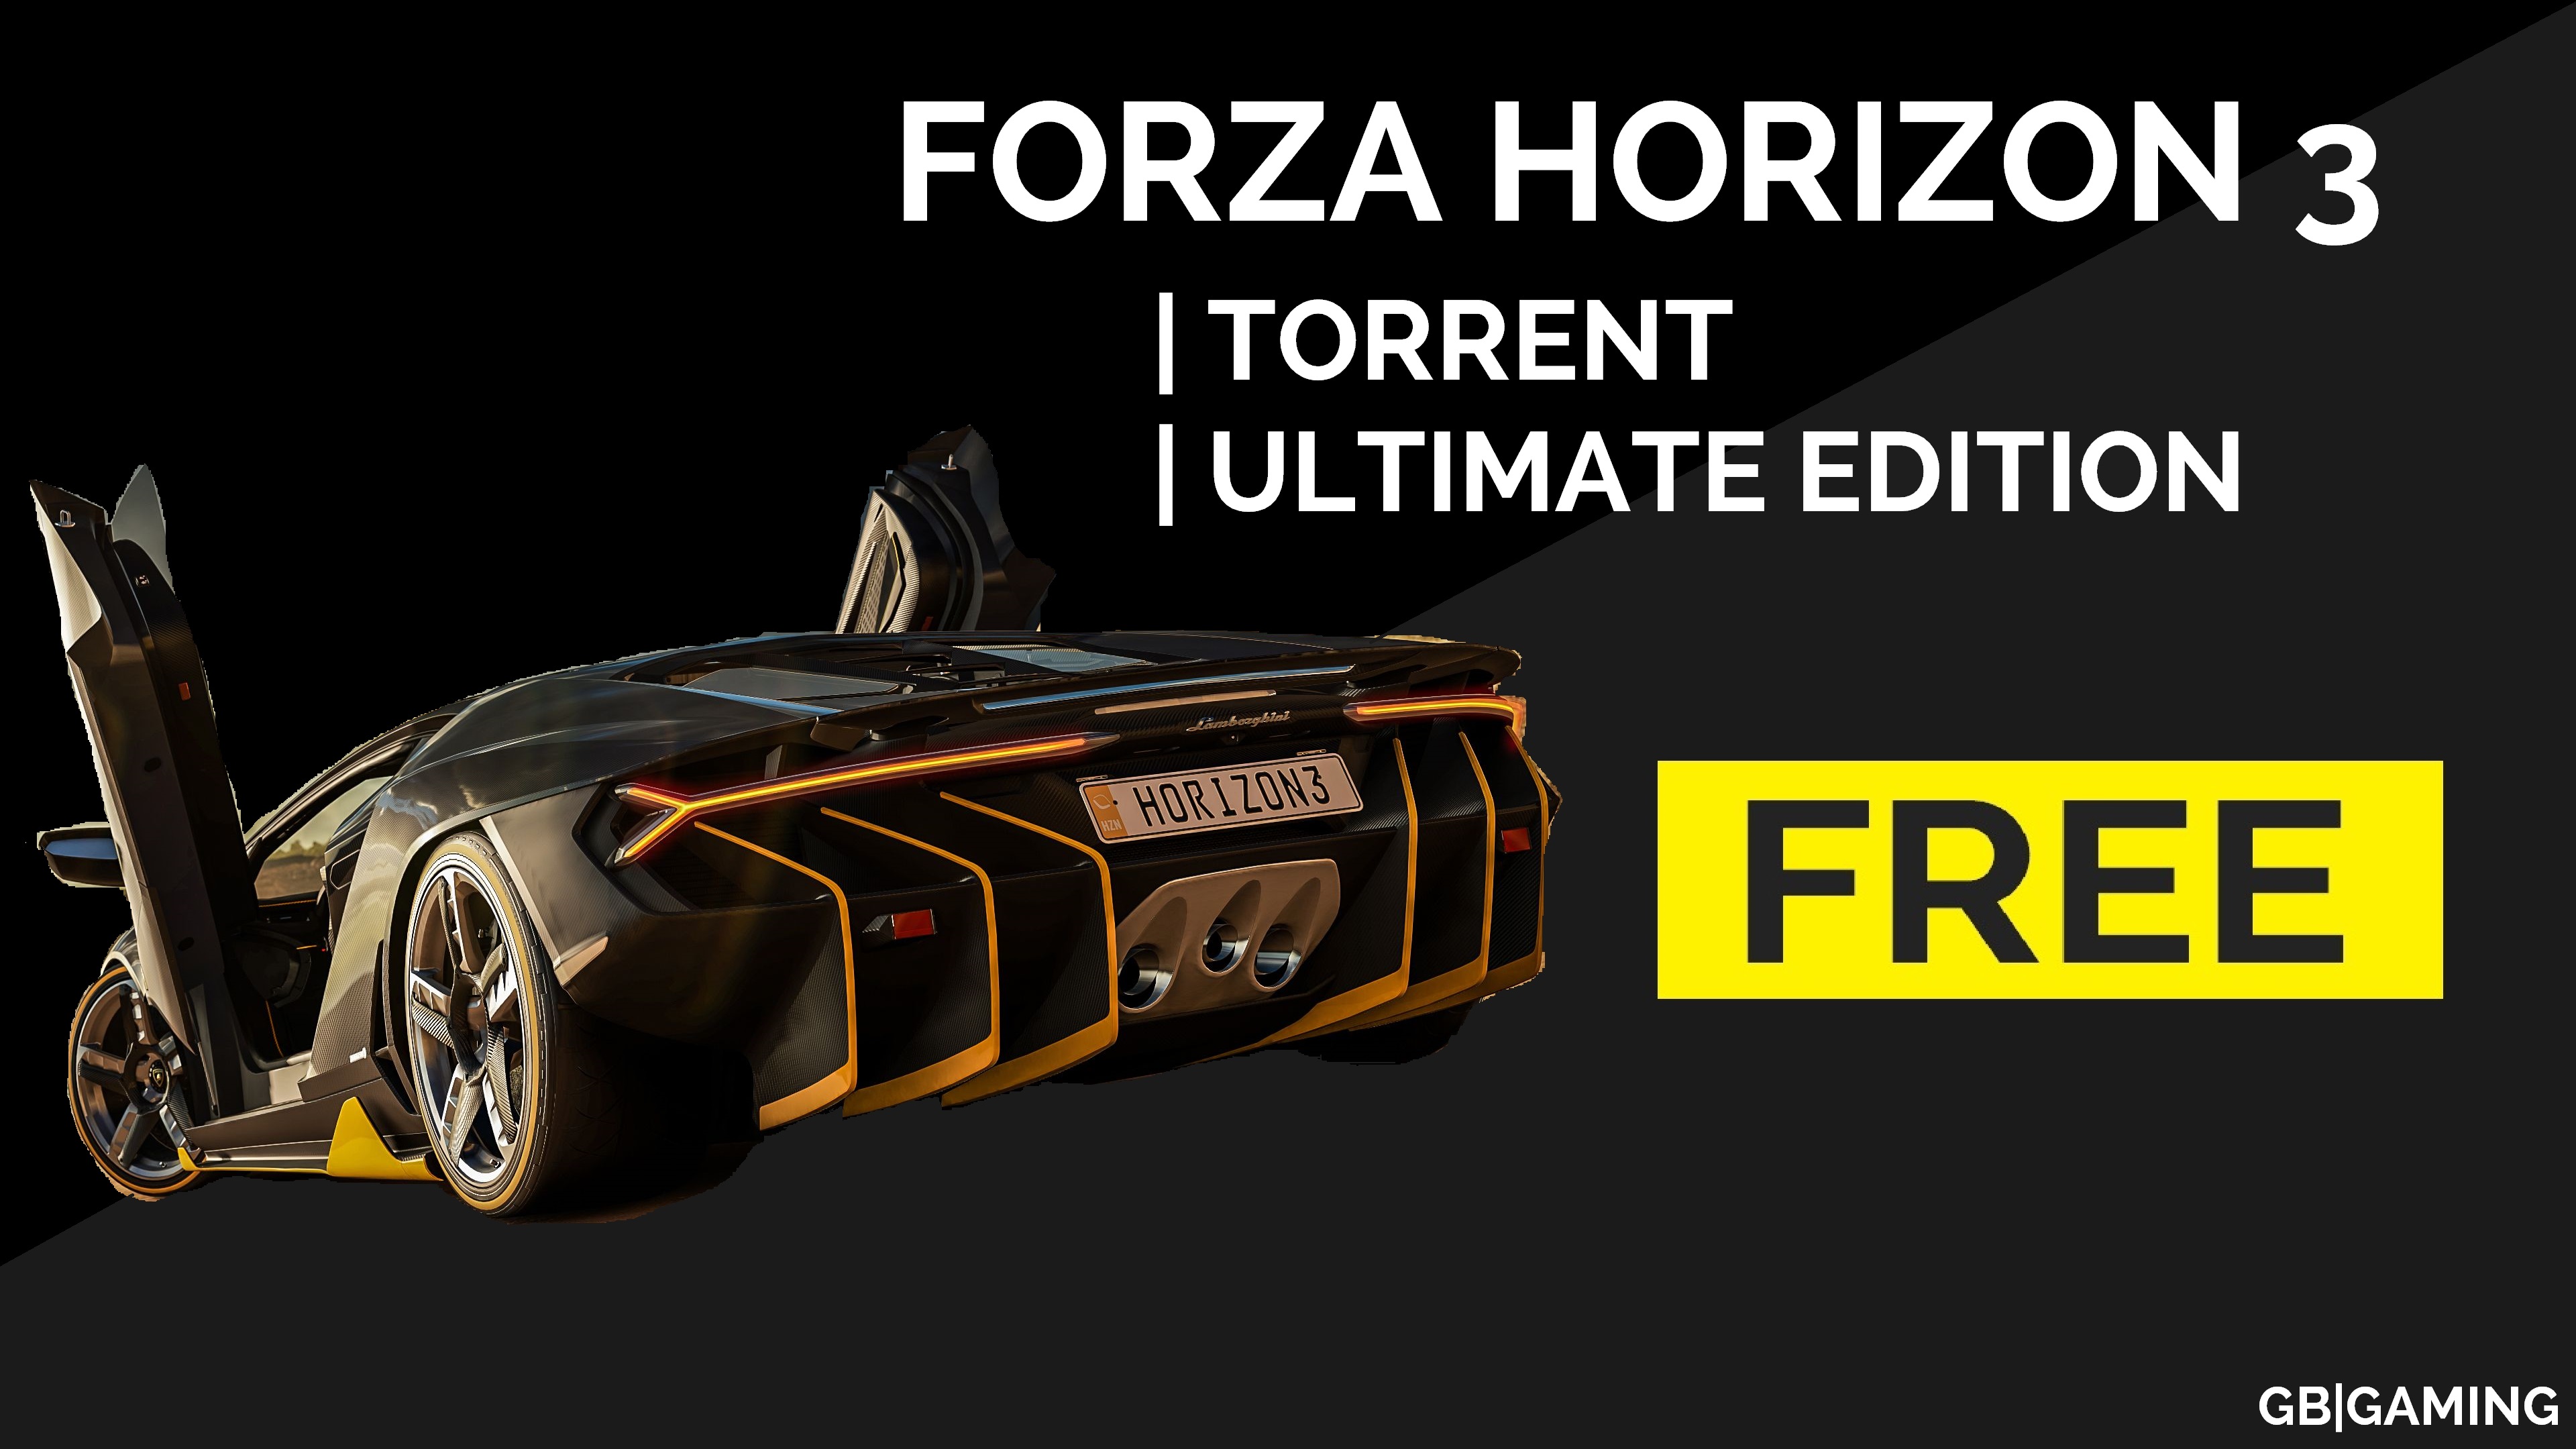 forza horizon 2 pc download free full version windows 10